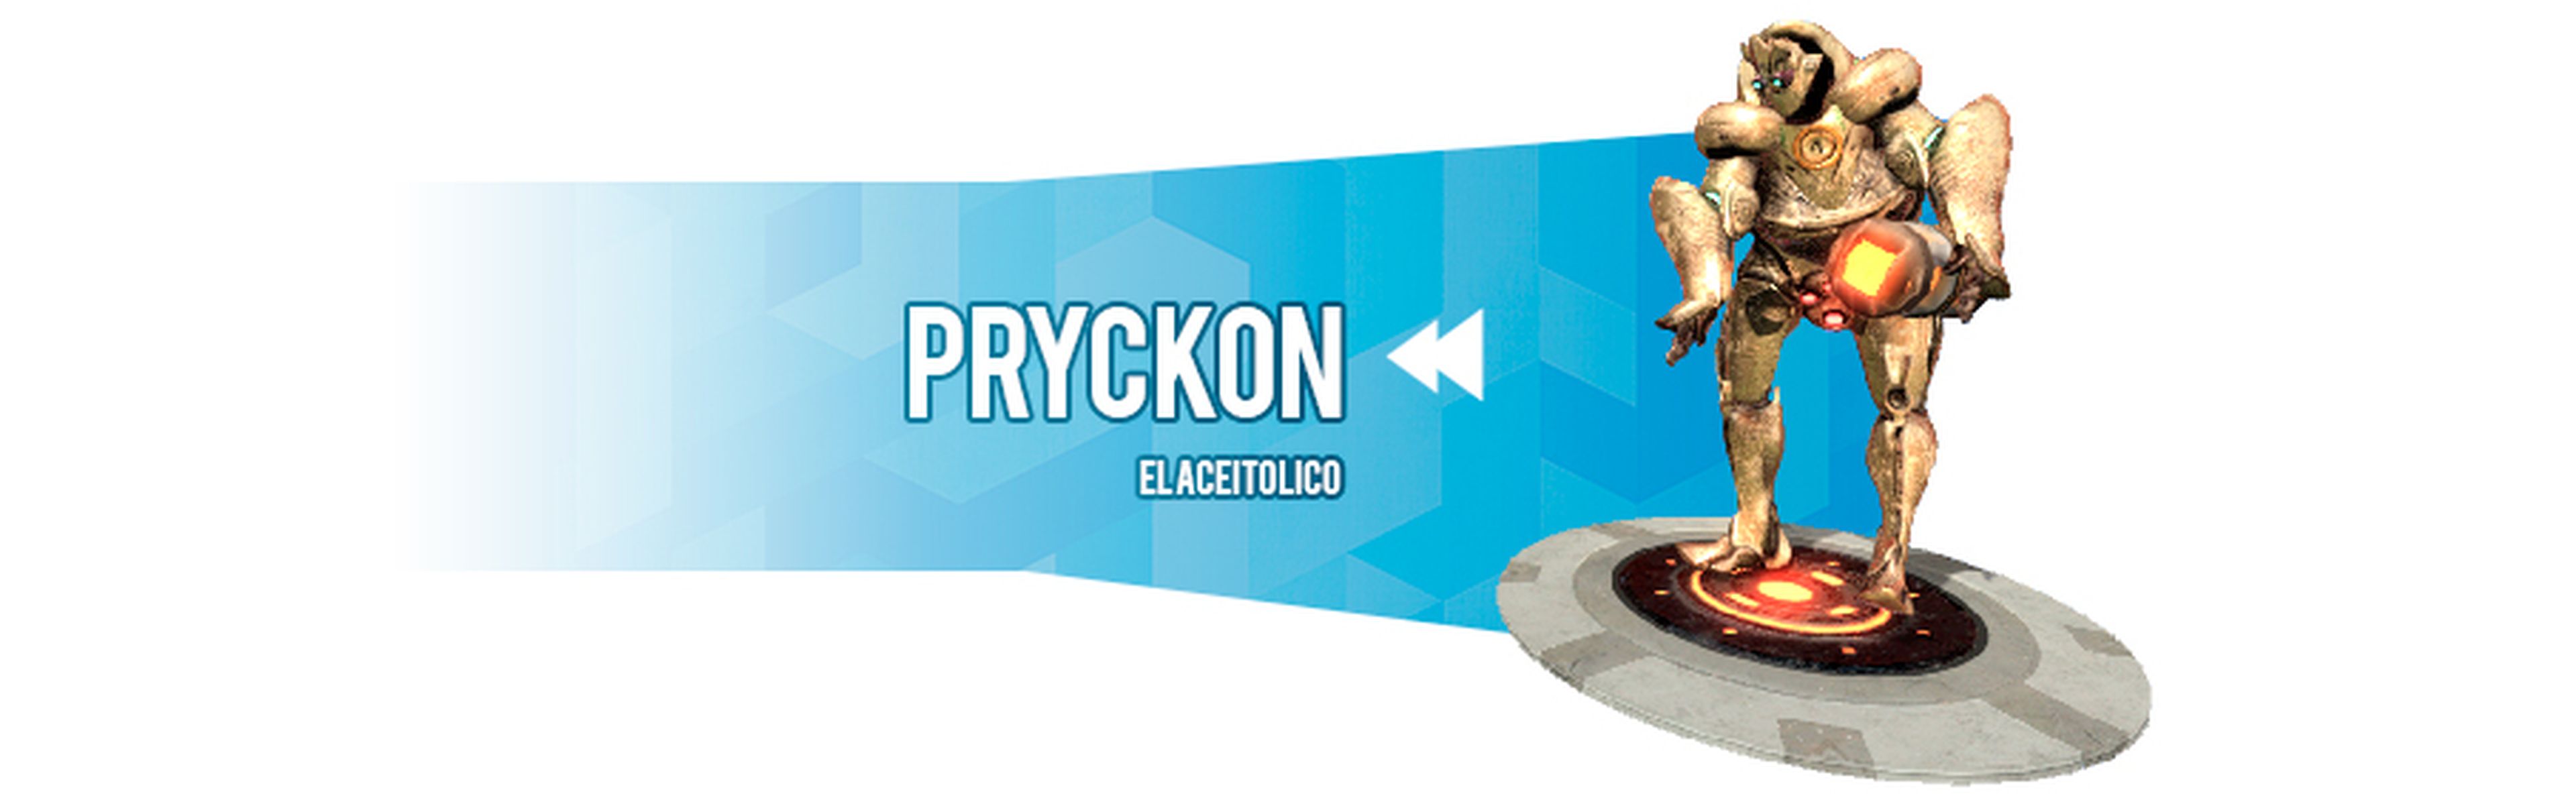 Pryckon, PlayStarter Way of Redemption